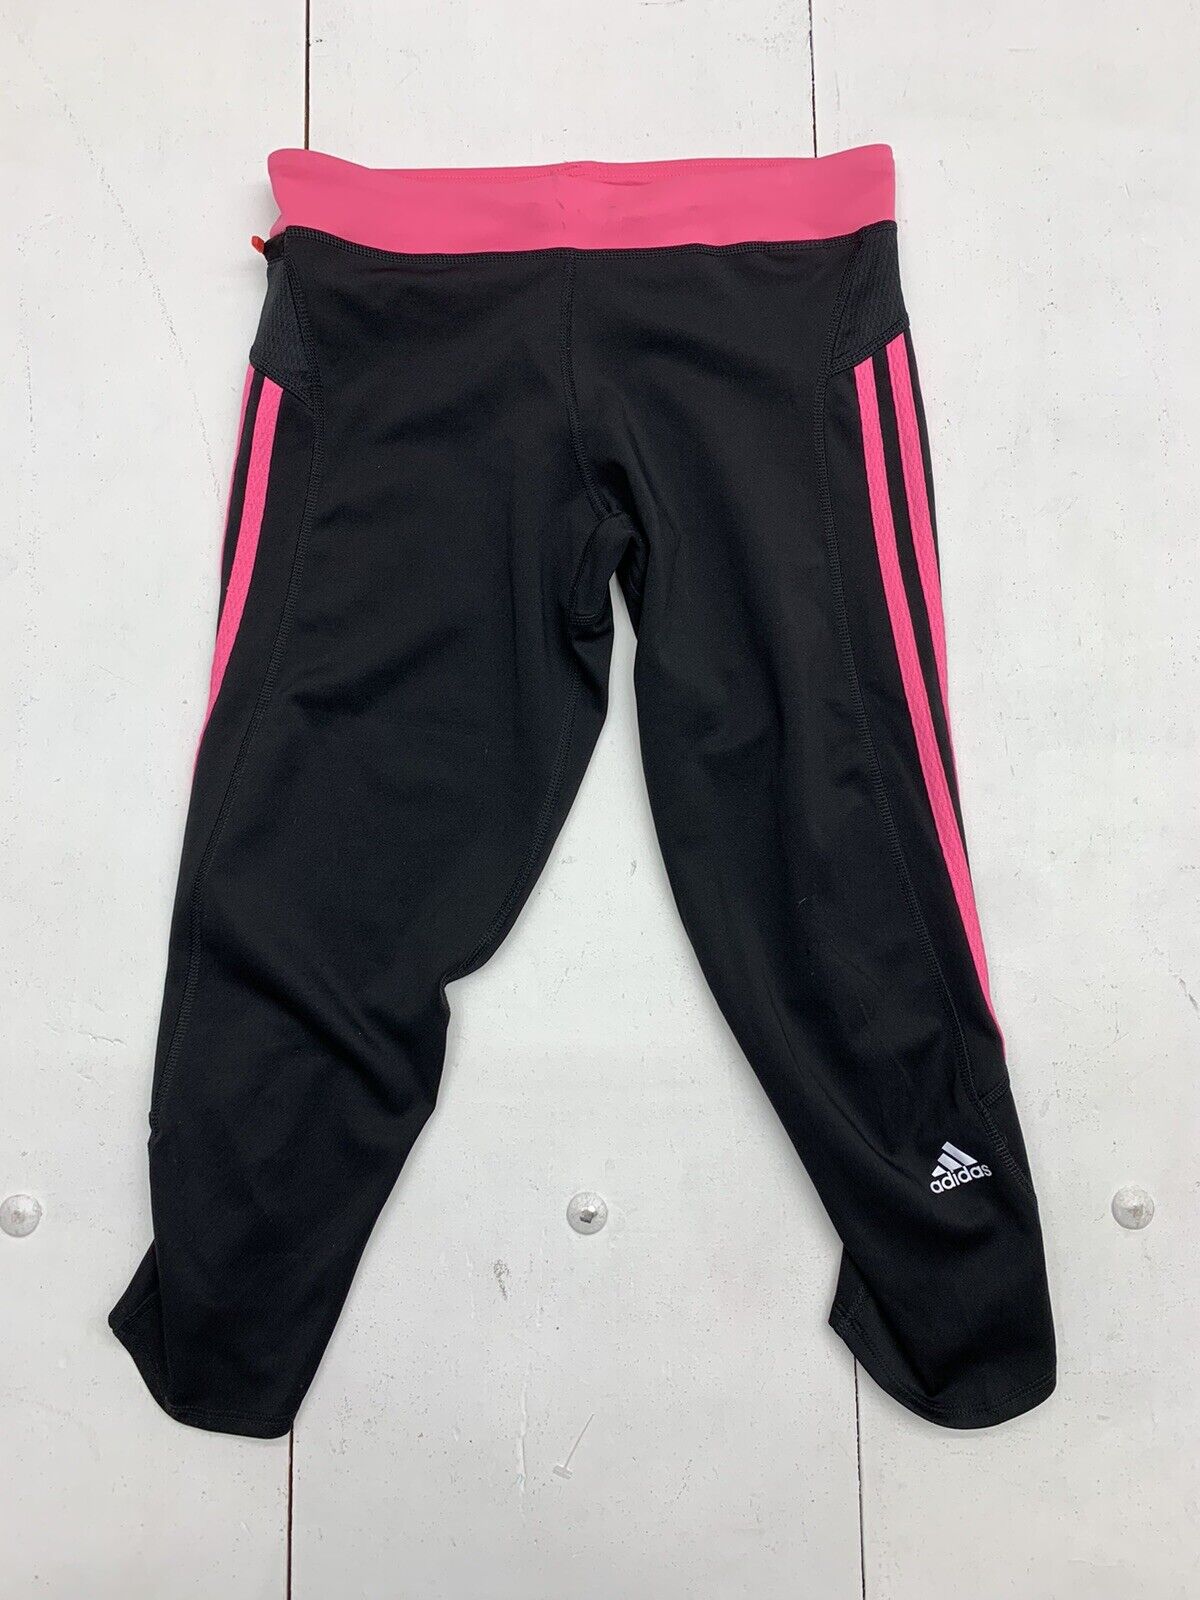 Adidas Womens Black Pink Capri Leggings Size Small - beyond exchange